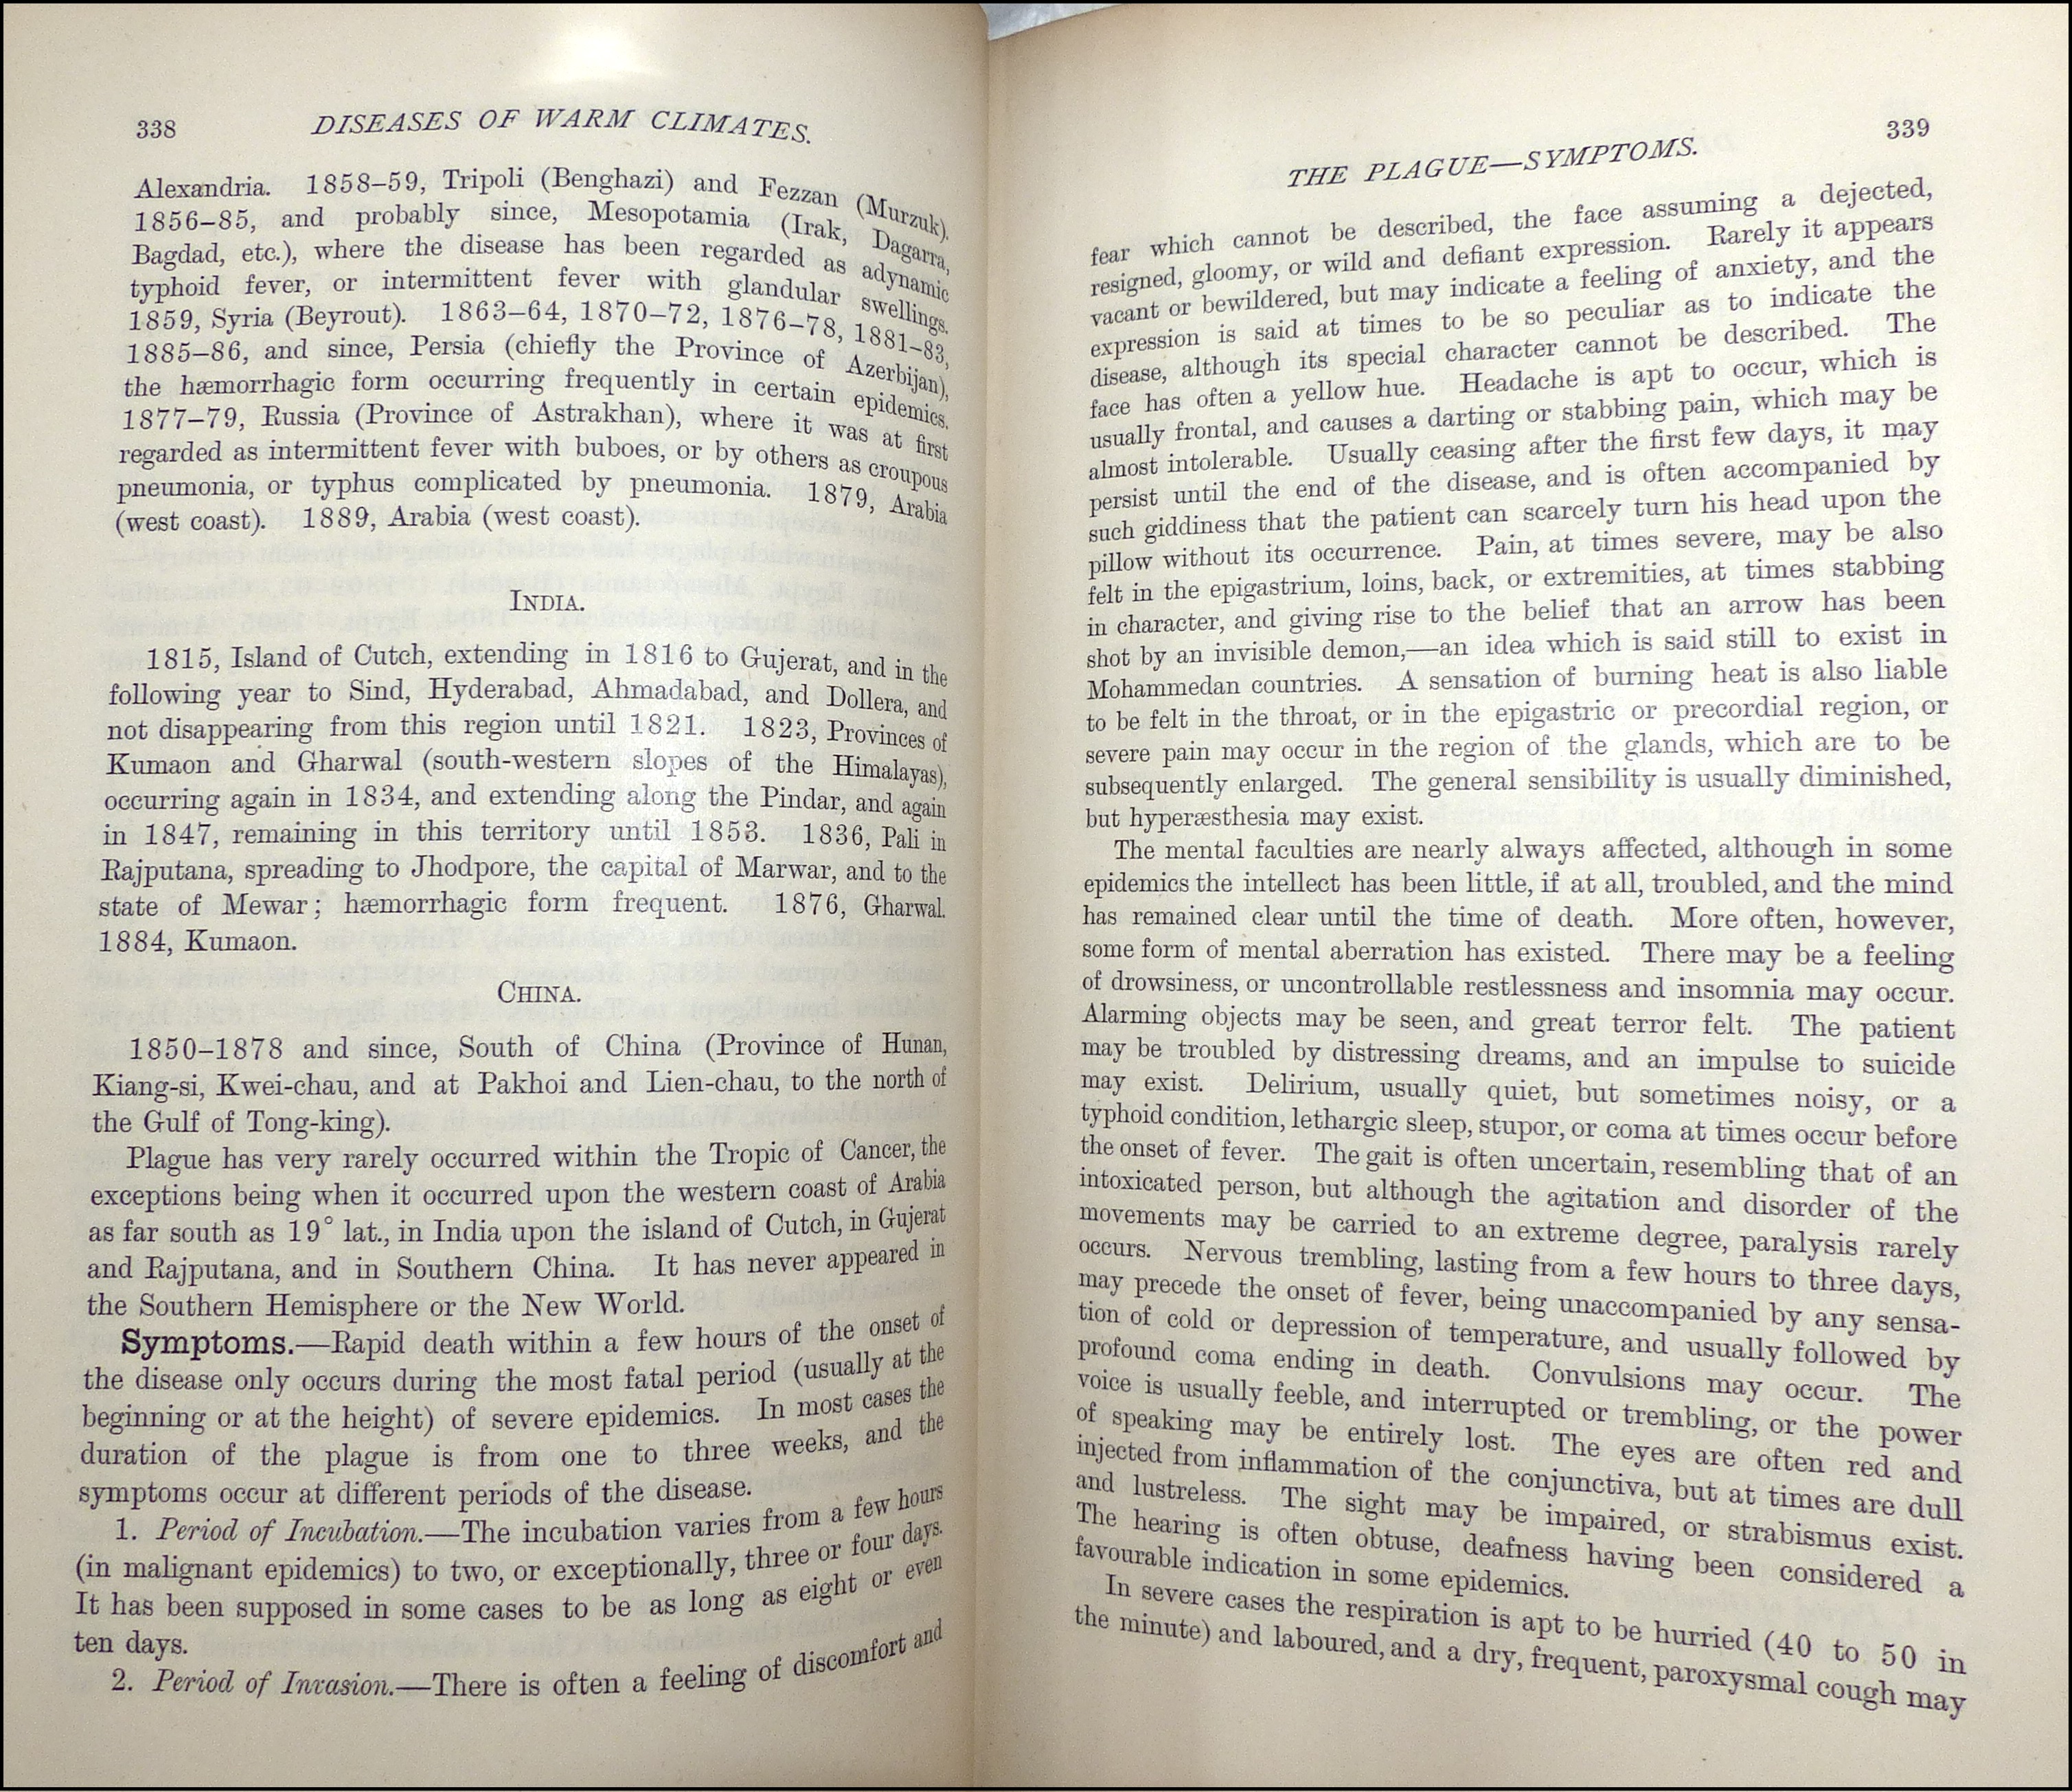 Hygiene and diseases of warm climates: Davidson, A. (ed.). Edinburgh: Young J. Pentland, 1893. STORE 215:35